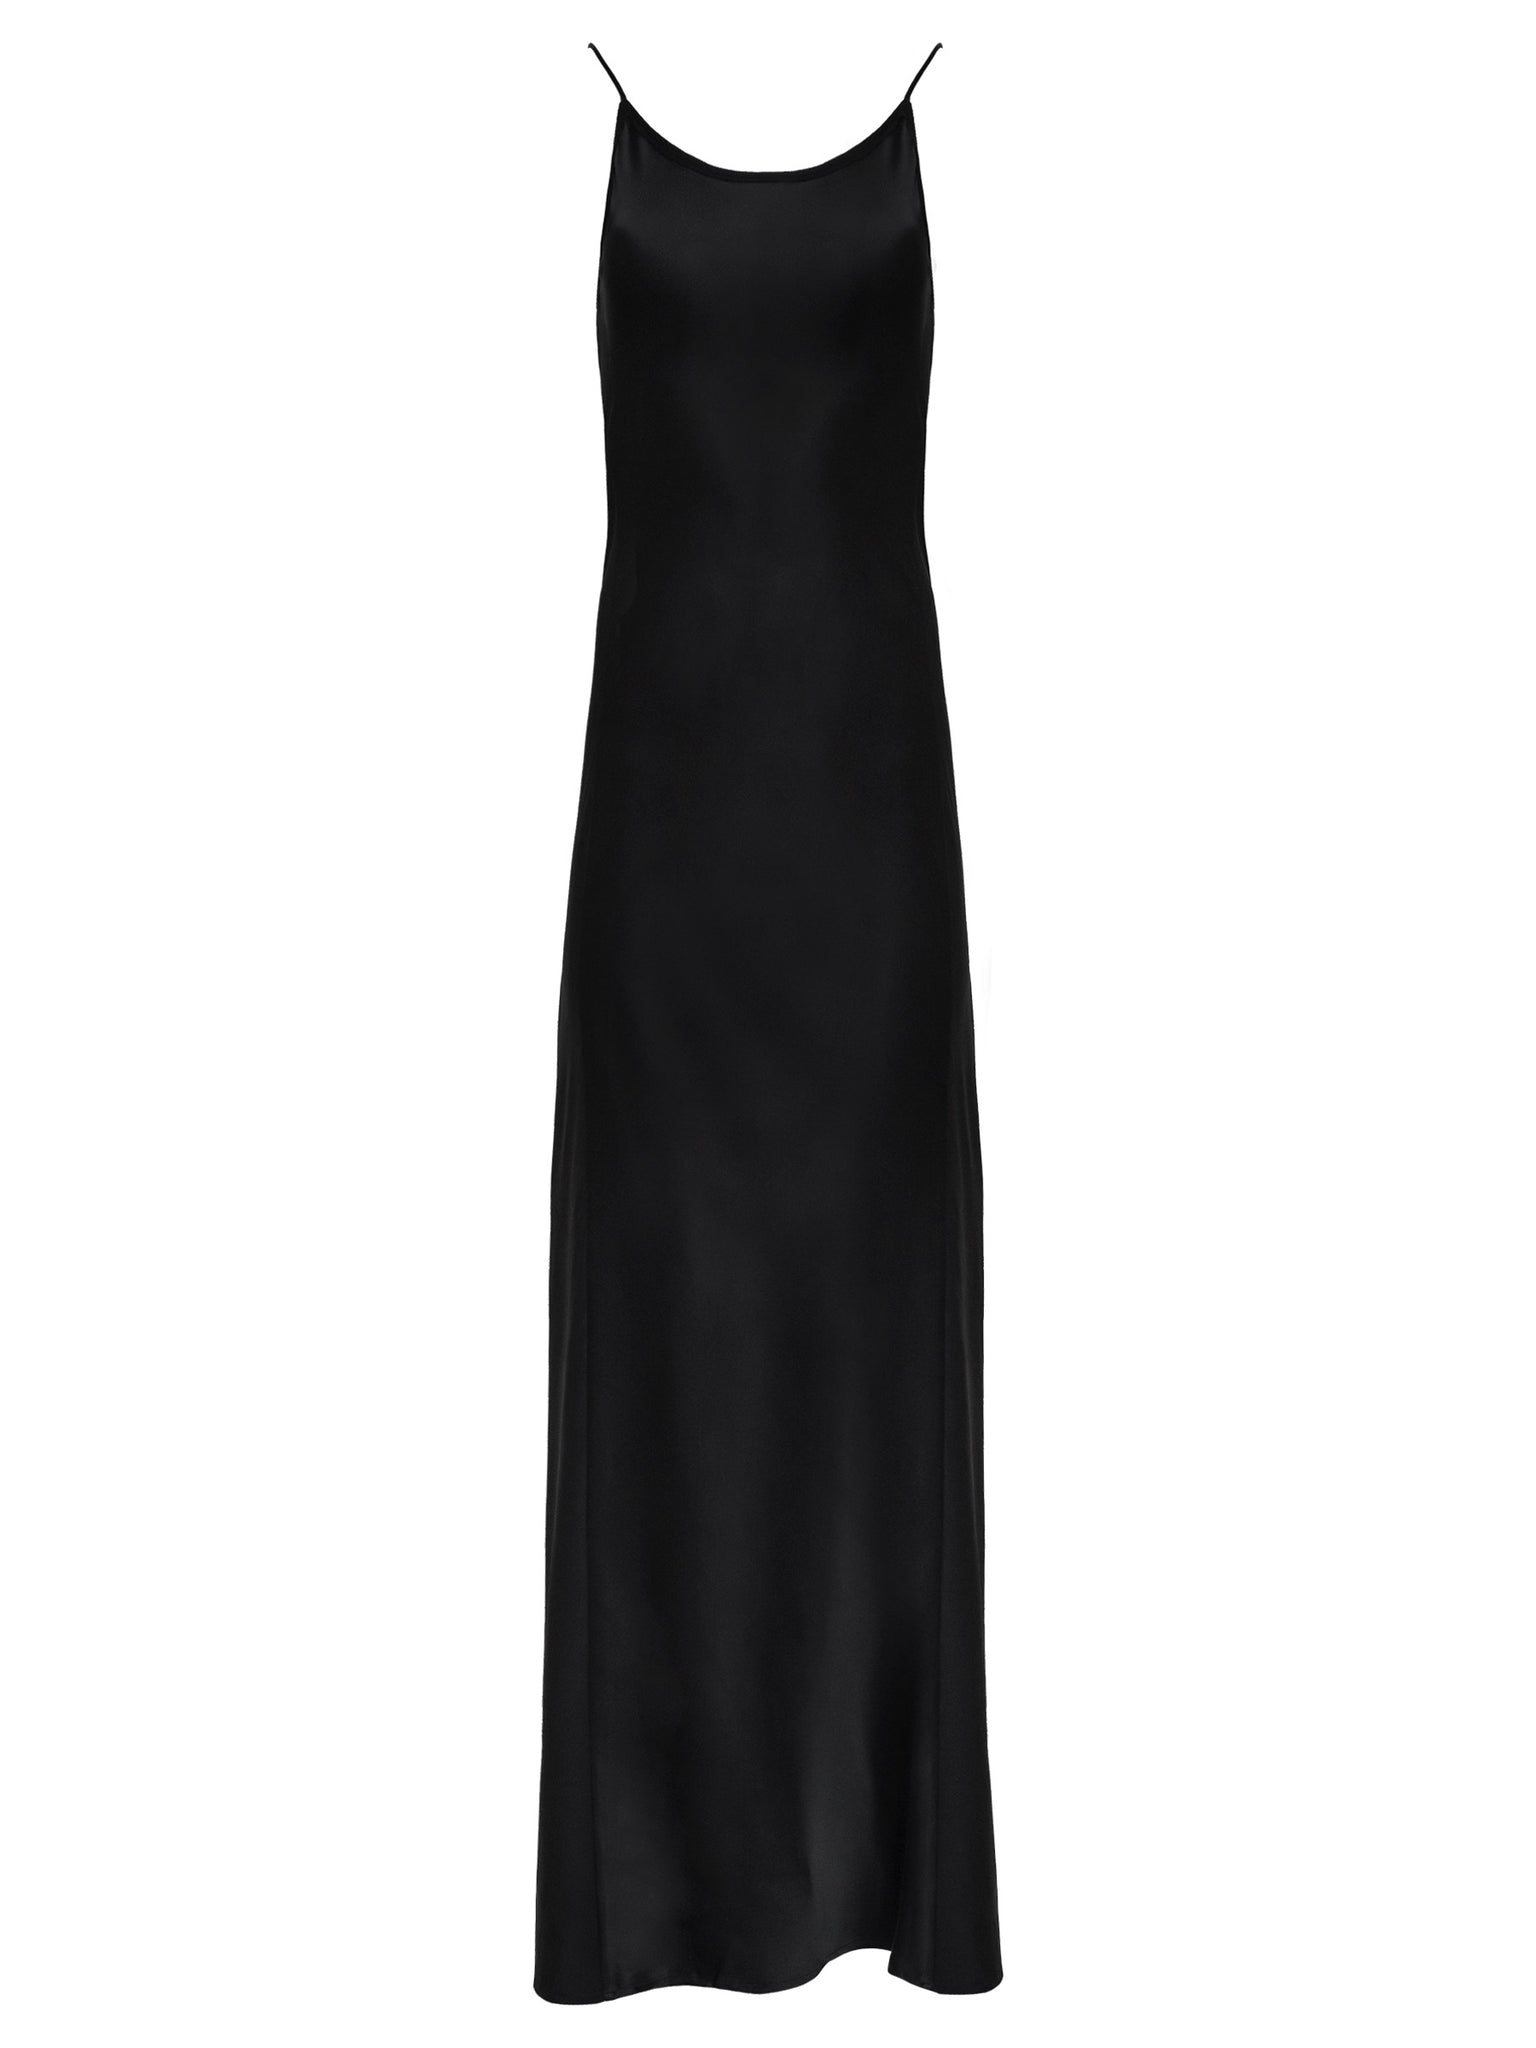 Marle | Black Sala Dress | The UNDONE by Marle